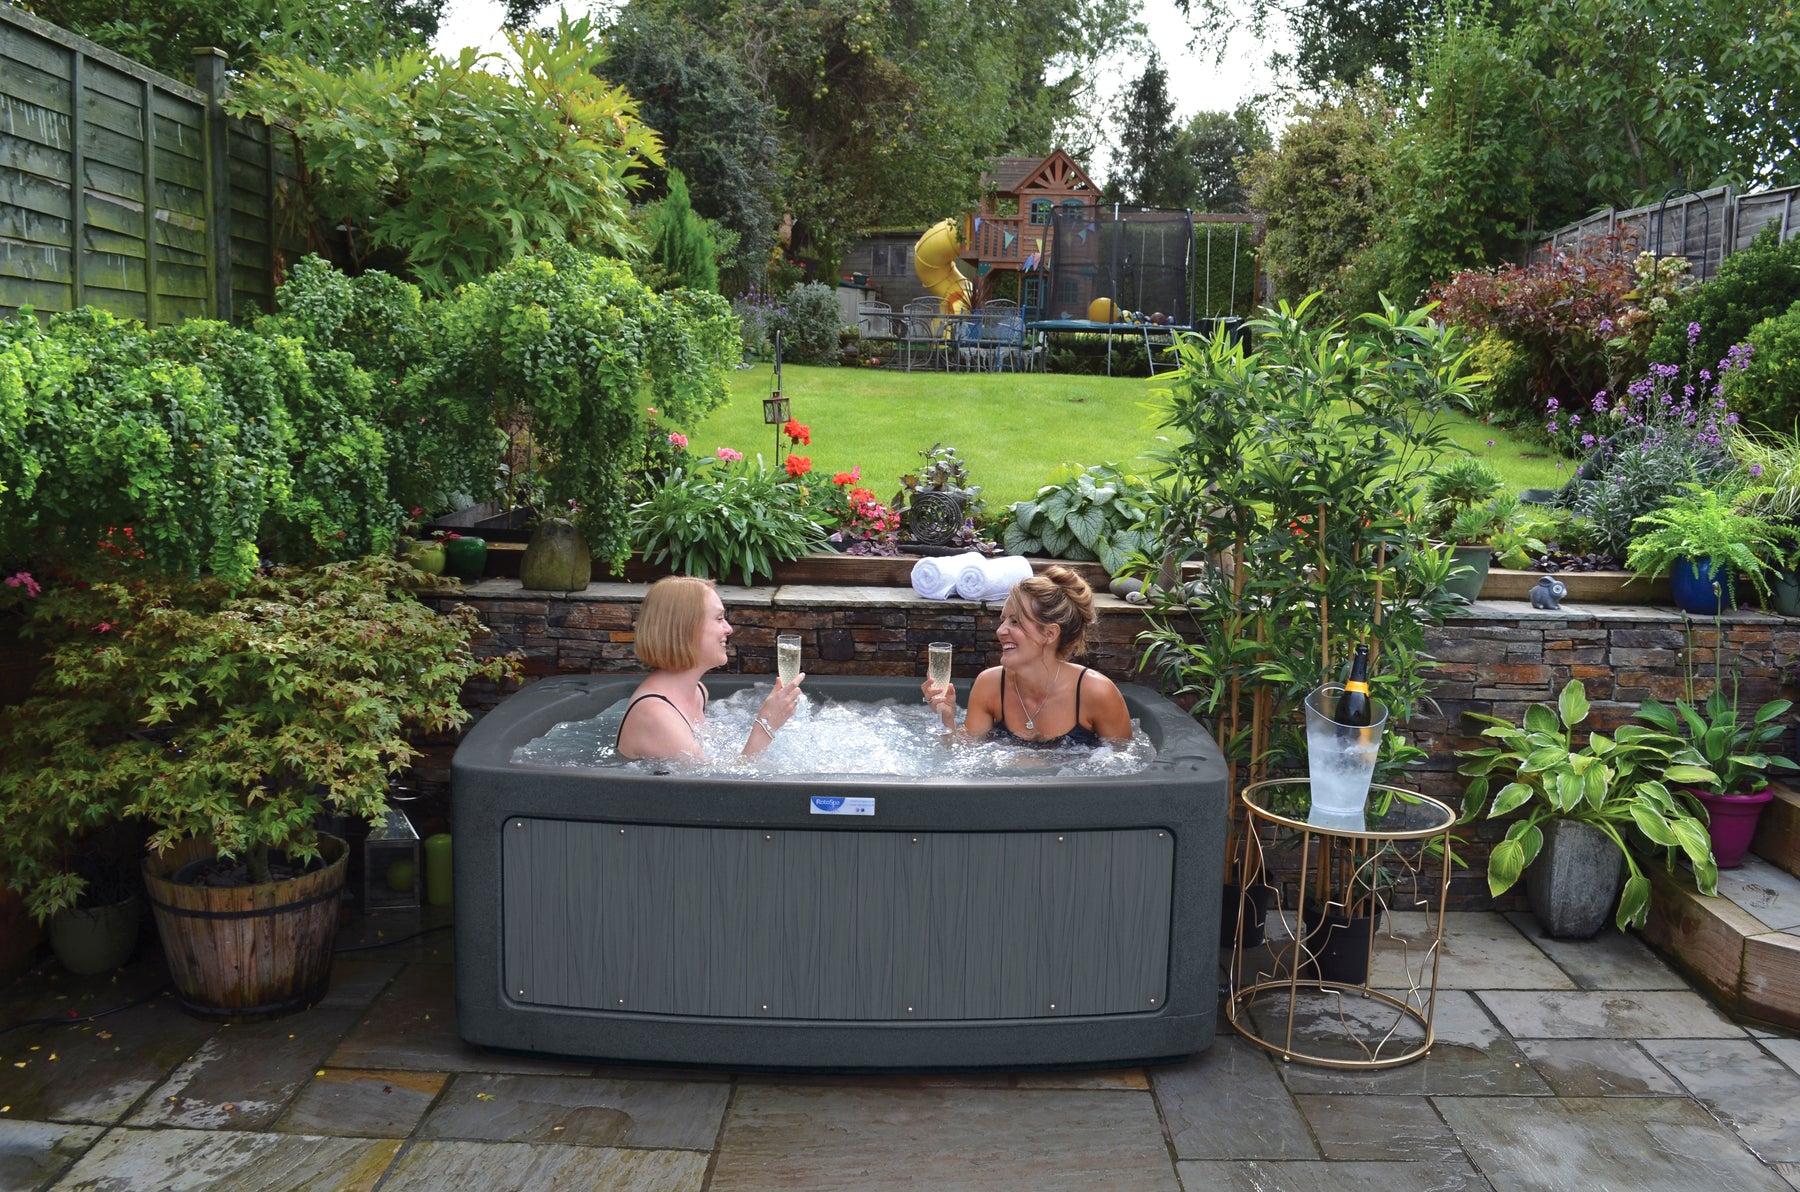 polyethylene shell 2 person hot tub for sale uk